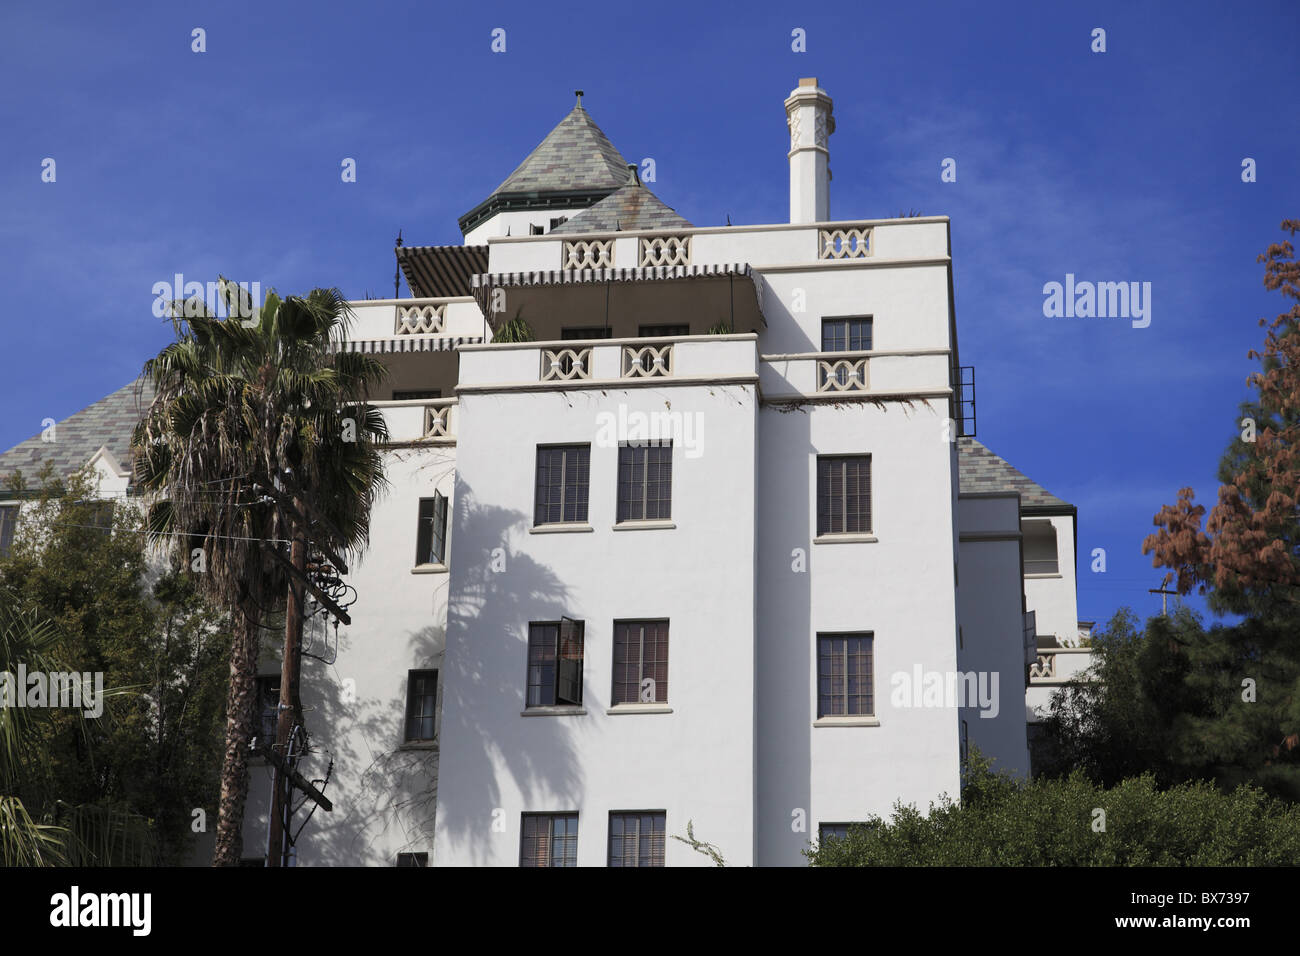 Hotel Chateau Marmont, Sunset Boulevard, Los Angeles, California, Vereinigte Staaten von Amerika, Nordamerika Stockfoto